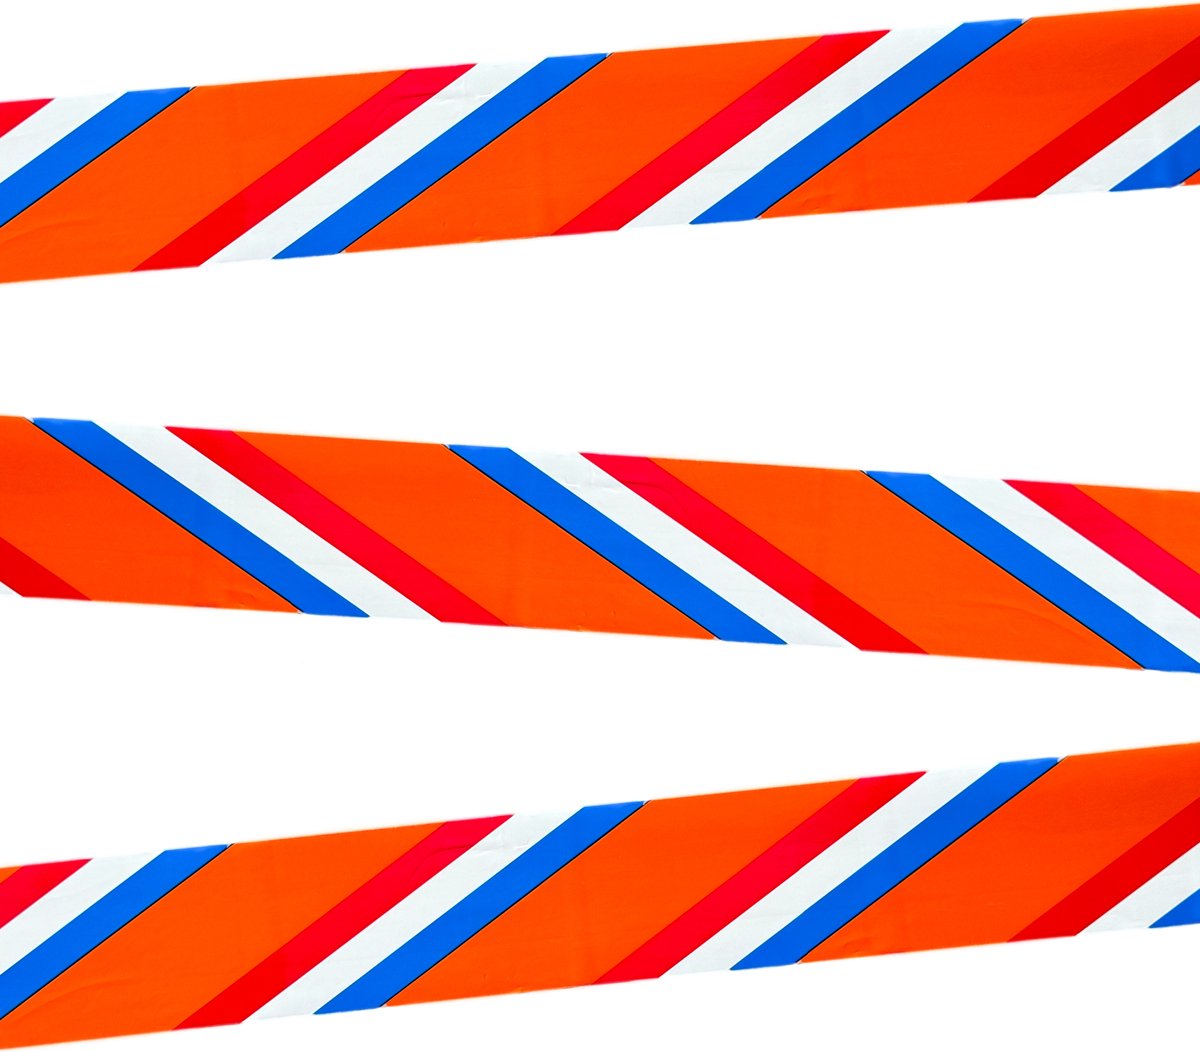 3BMT - Afzetlint markeer lint oranje - rood-wit-blauw - 10 meter - 3 BMT